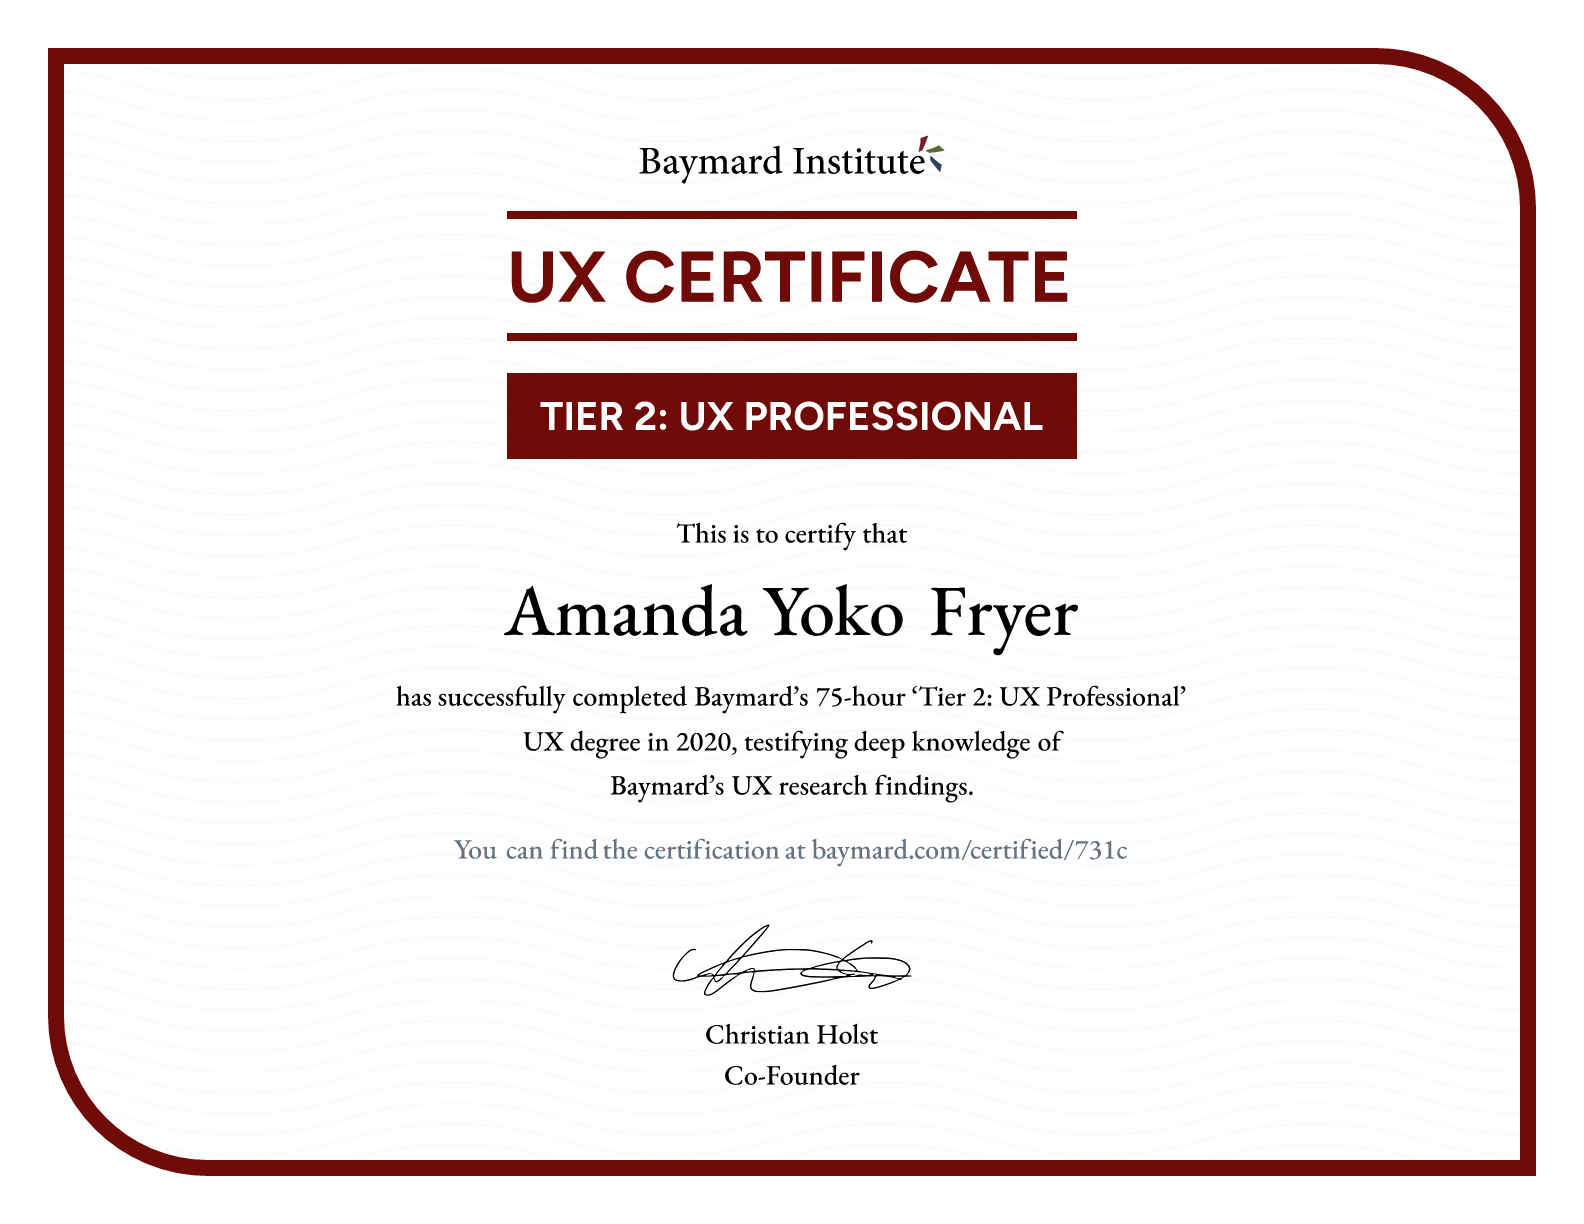 Amanda Yoko Fryer’s certificate